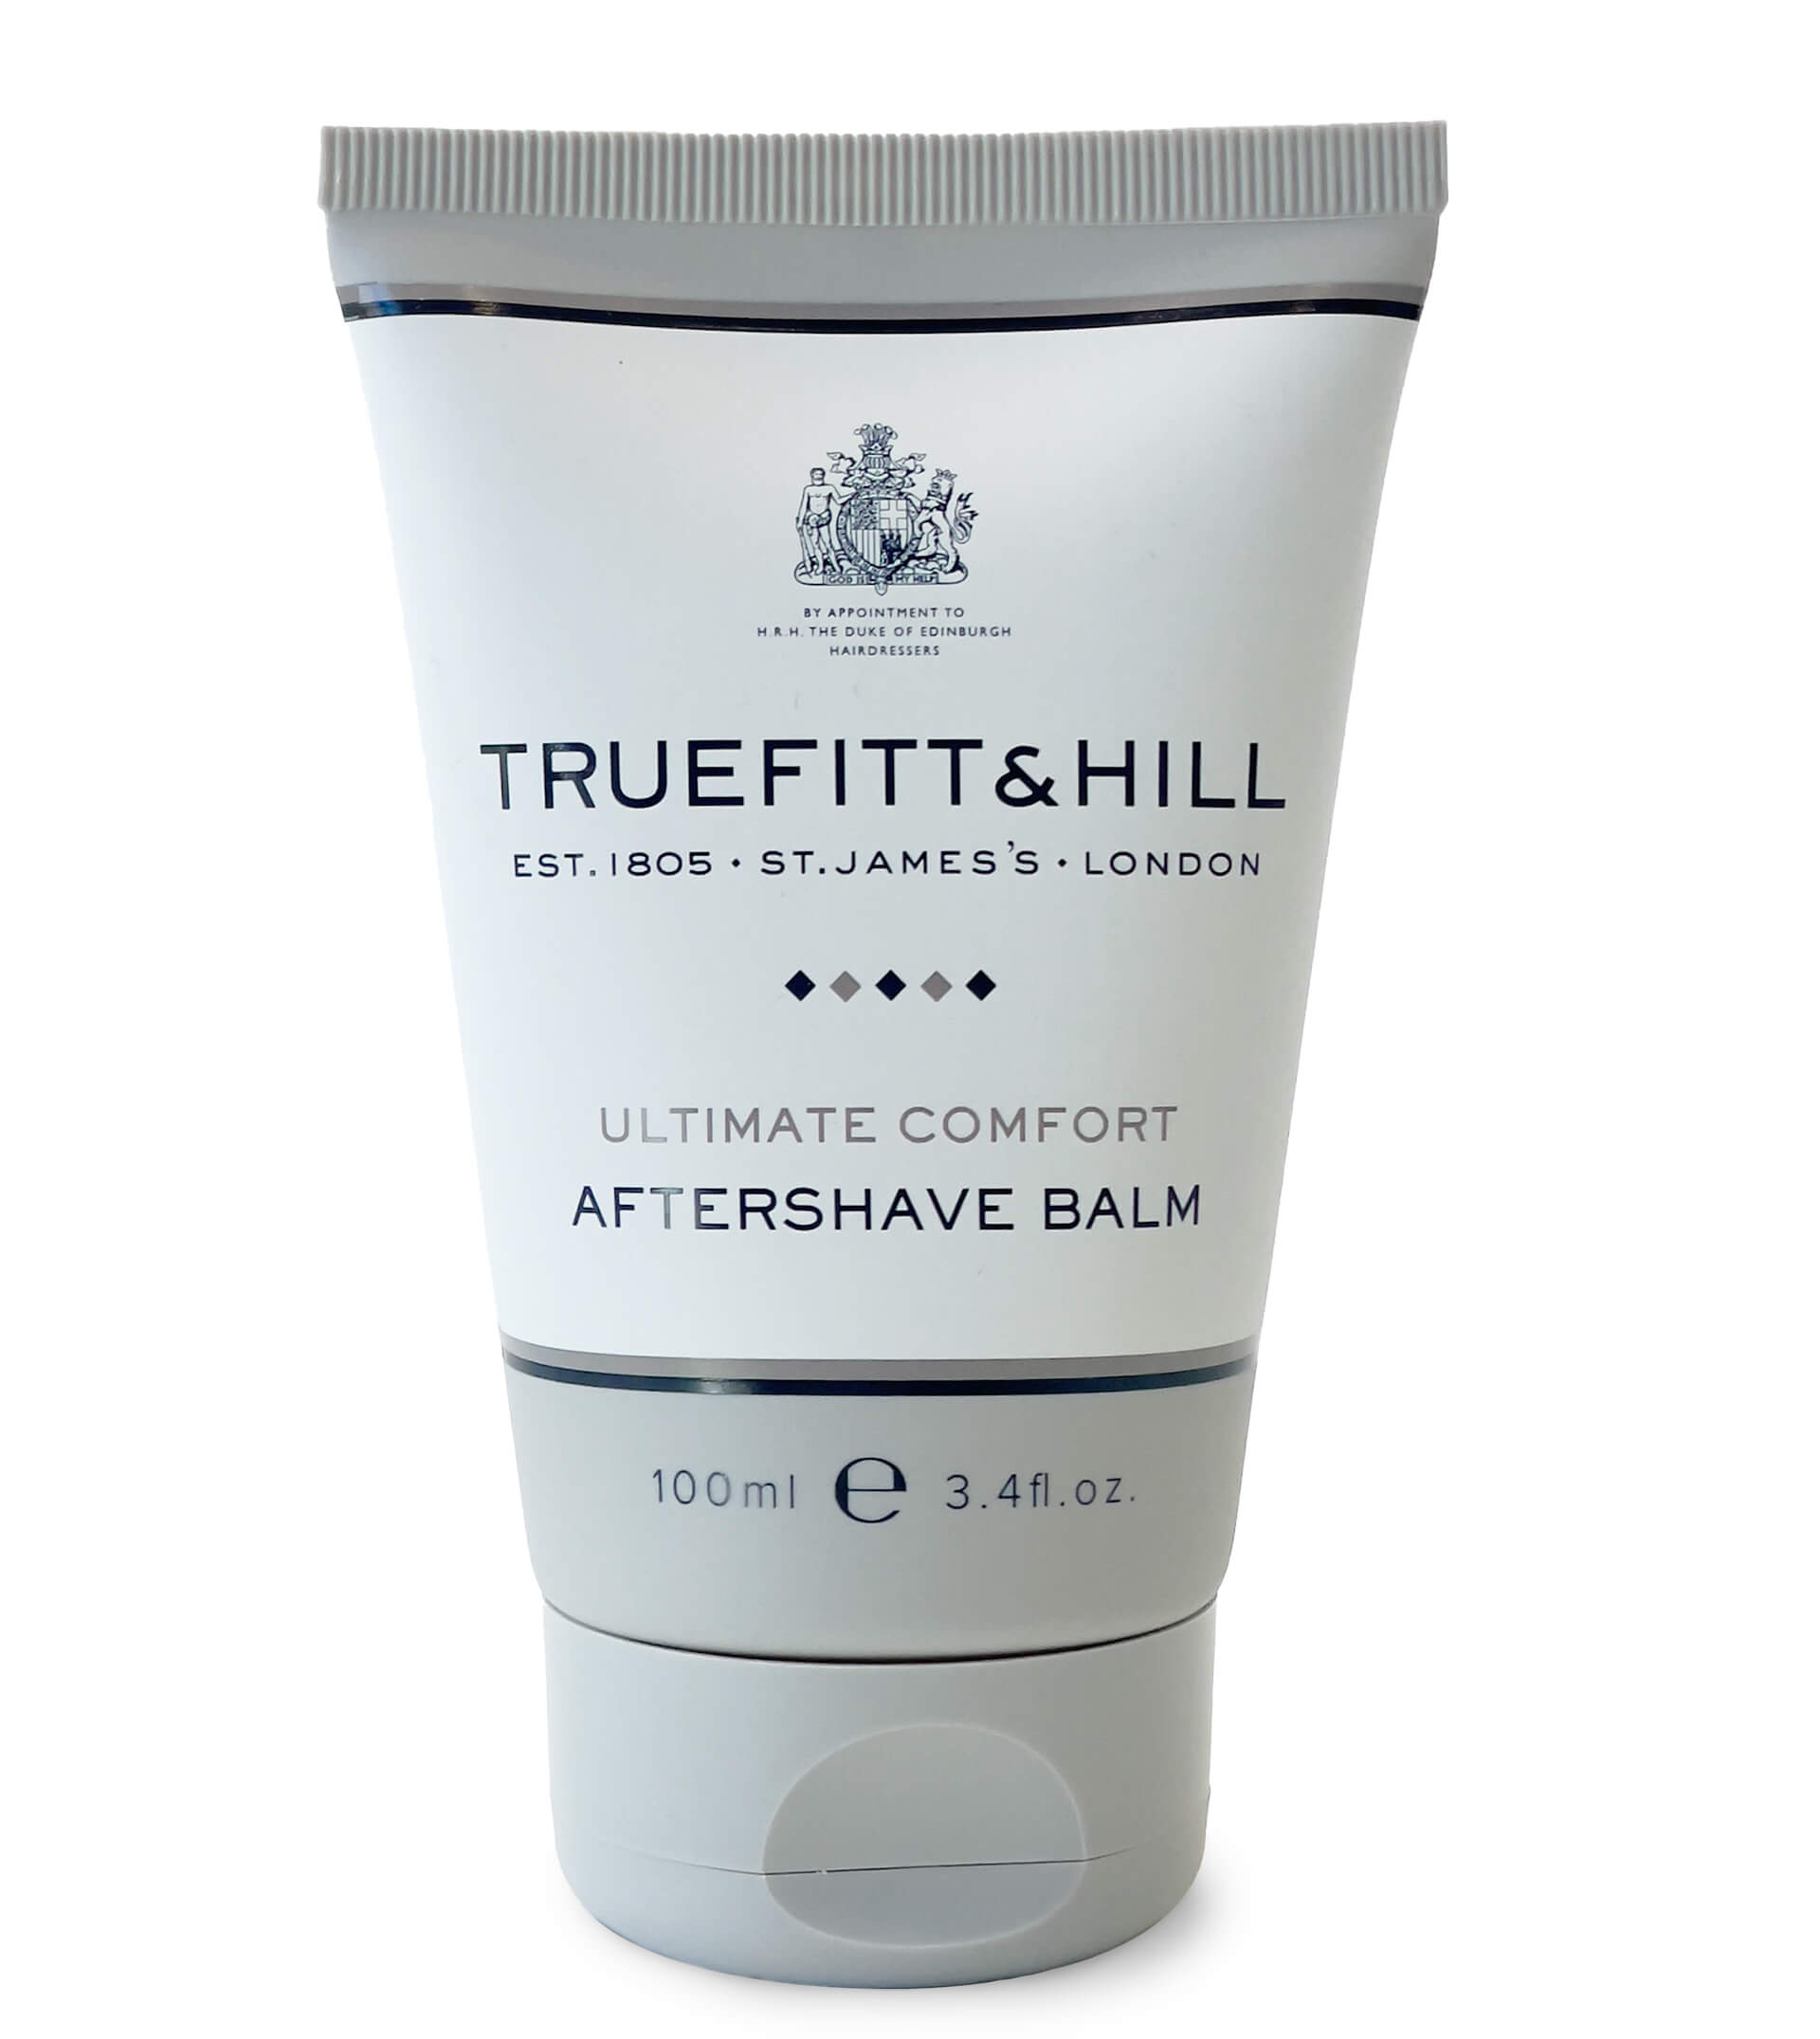 TRUEFITT & HILL Ultimate Comfort Aftershave Balm